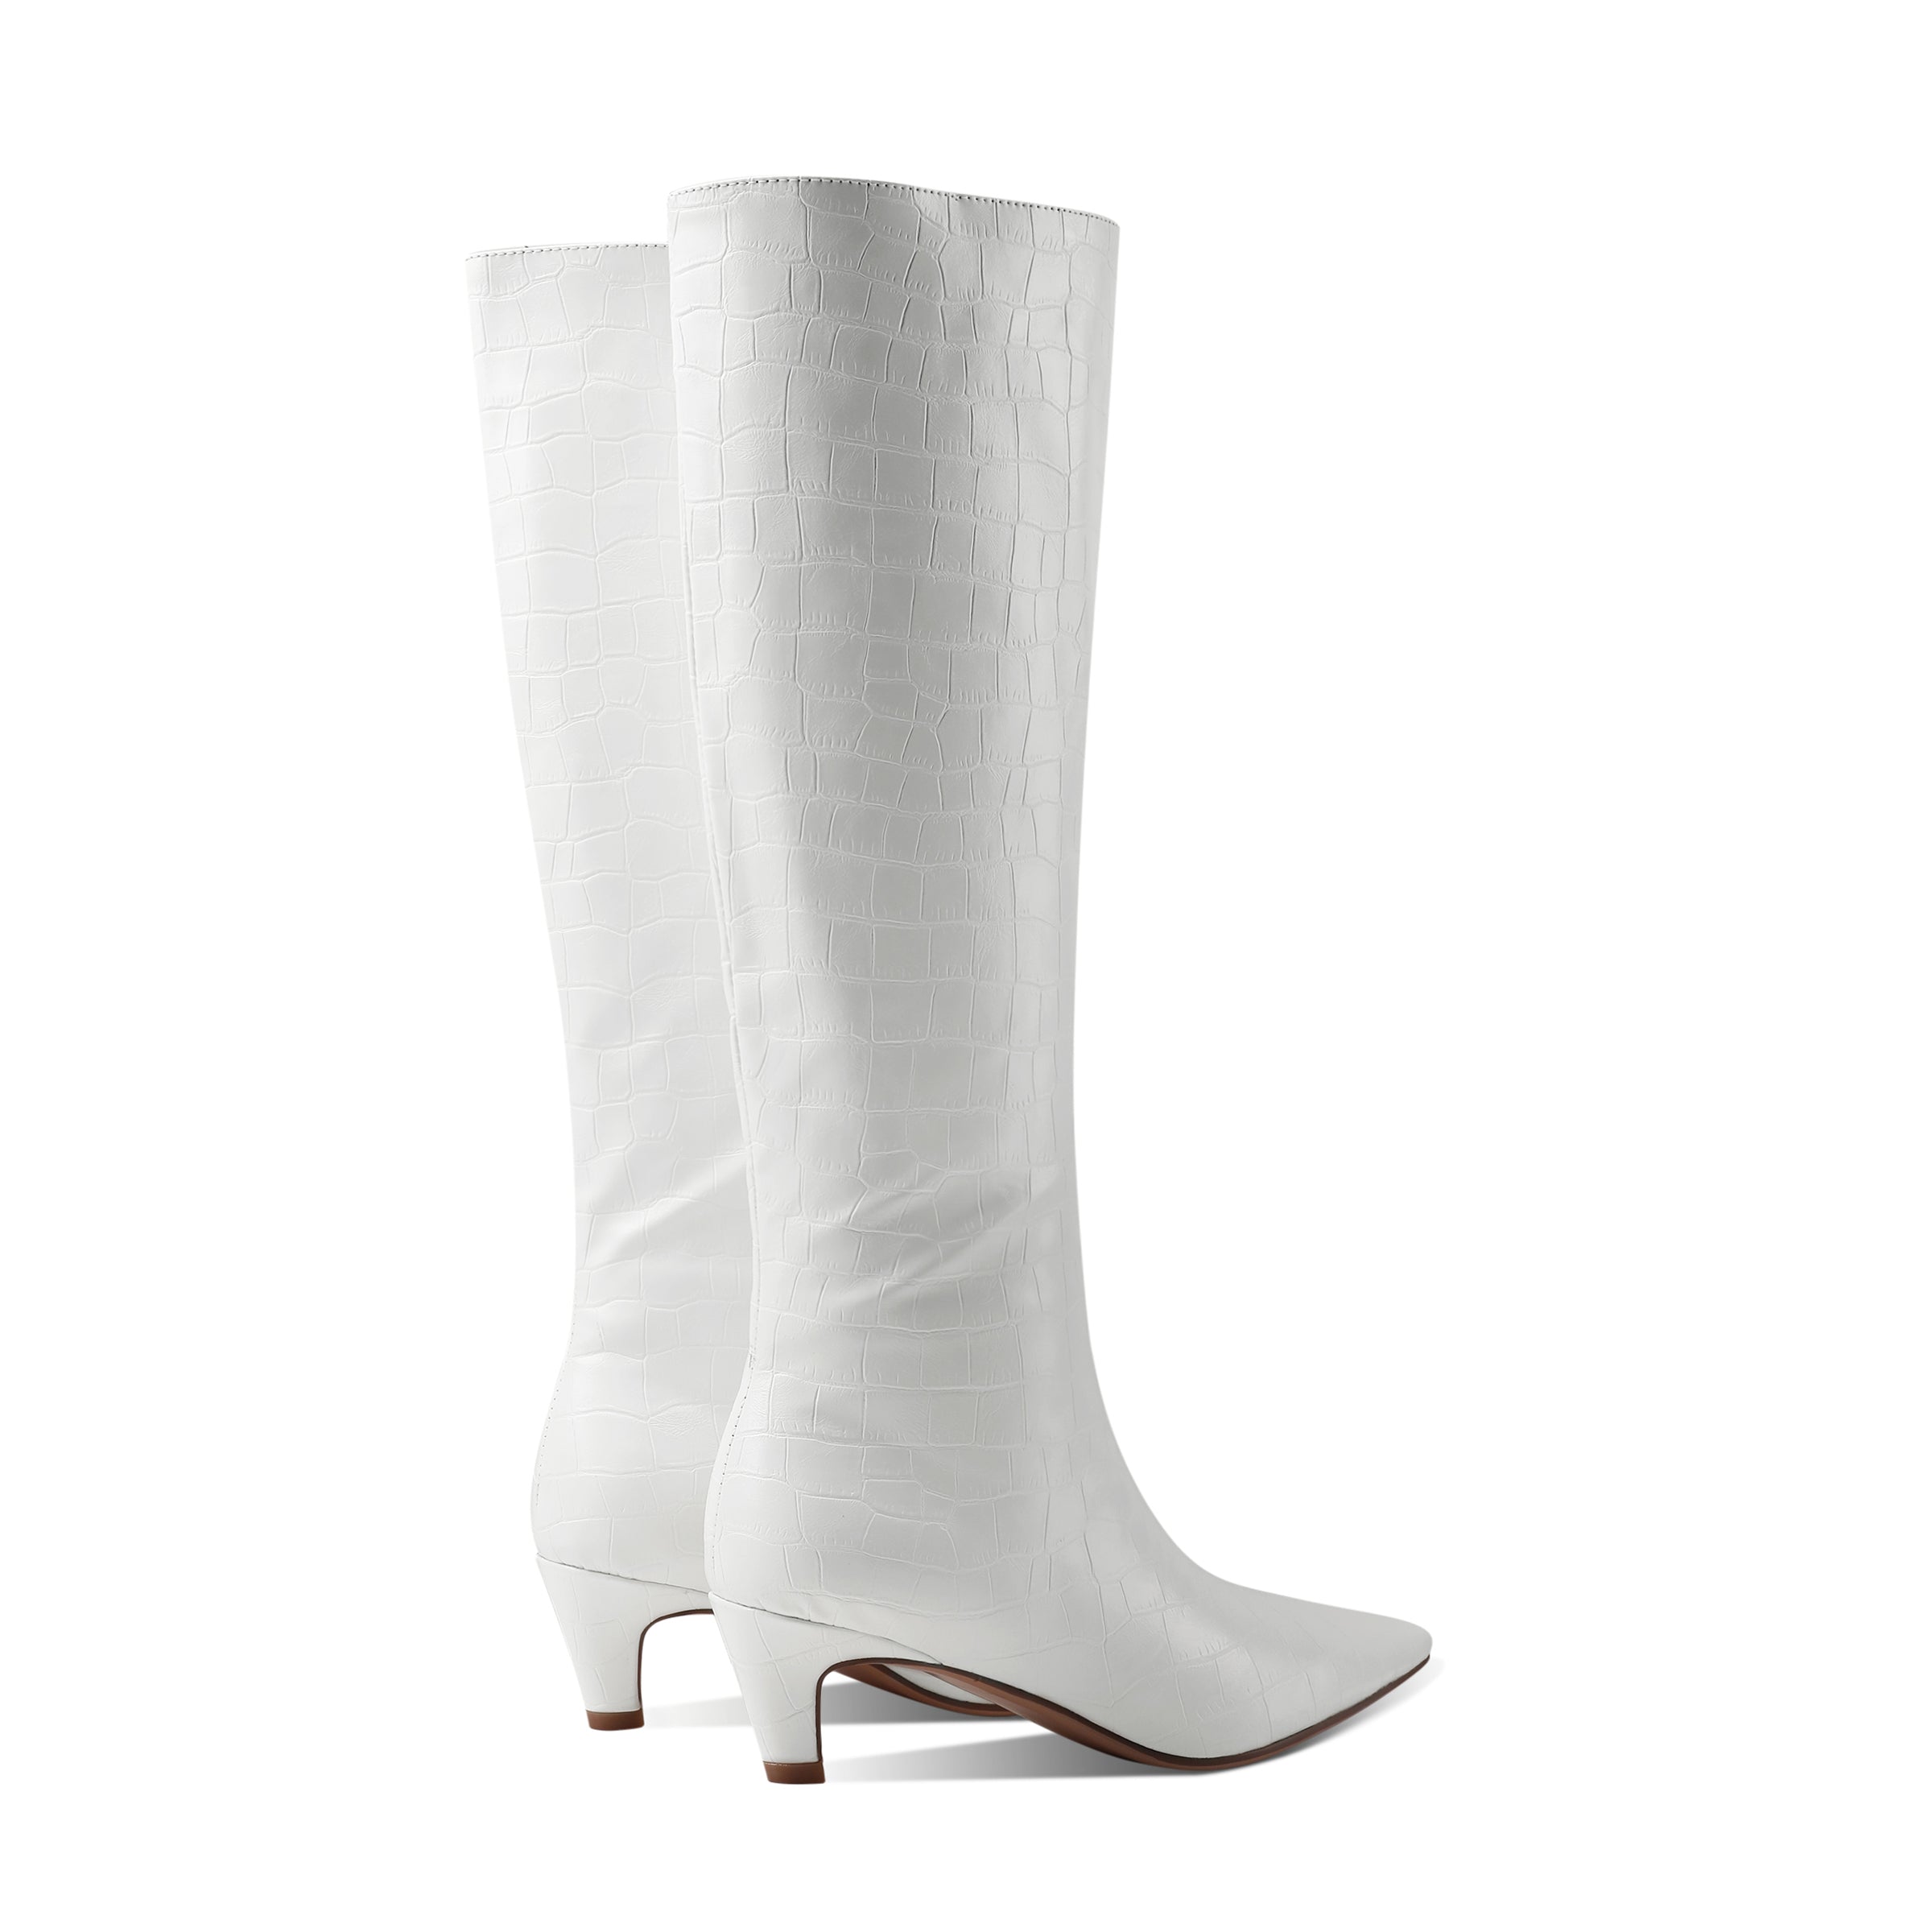 Bigsizeheels Square toe low heel boots- White freeshipping - bigsizeheel®-size5-size15 -All Plus Sizes Available!